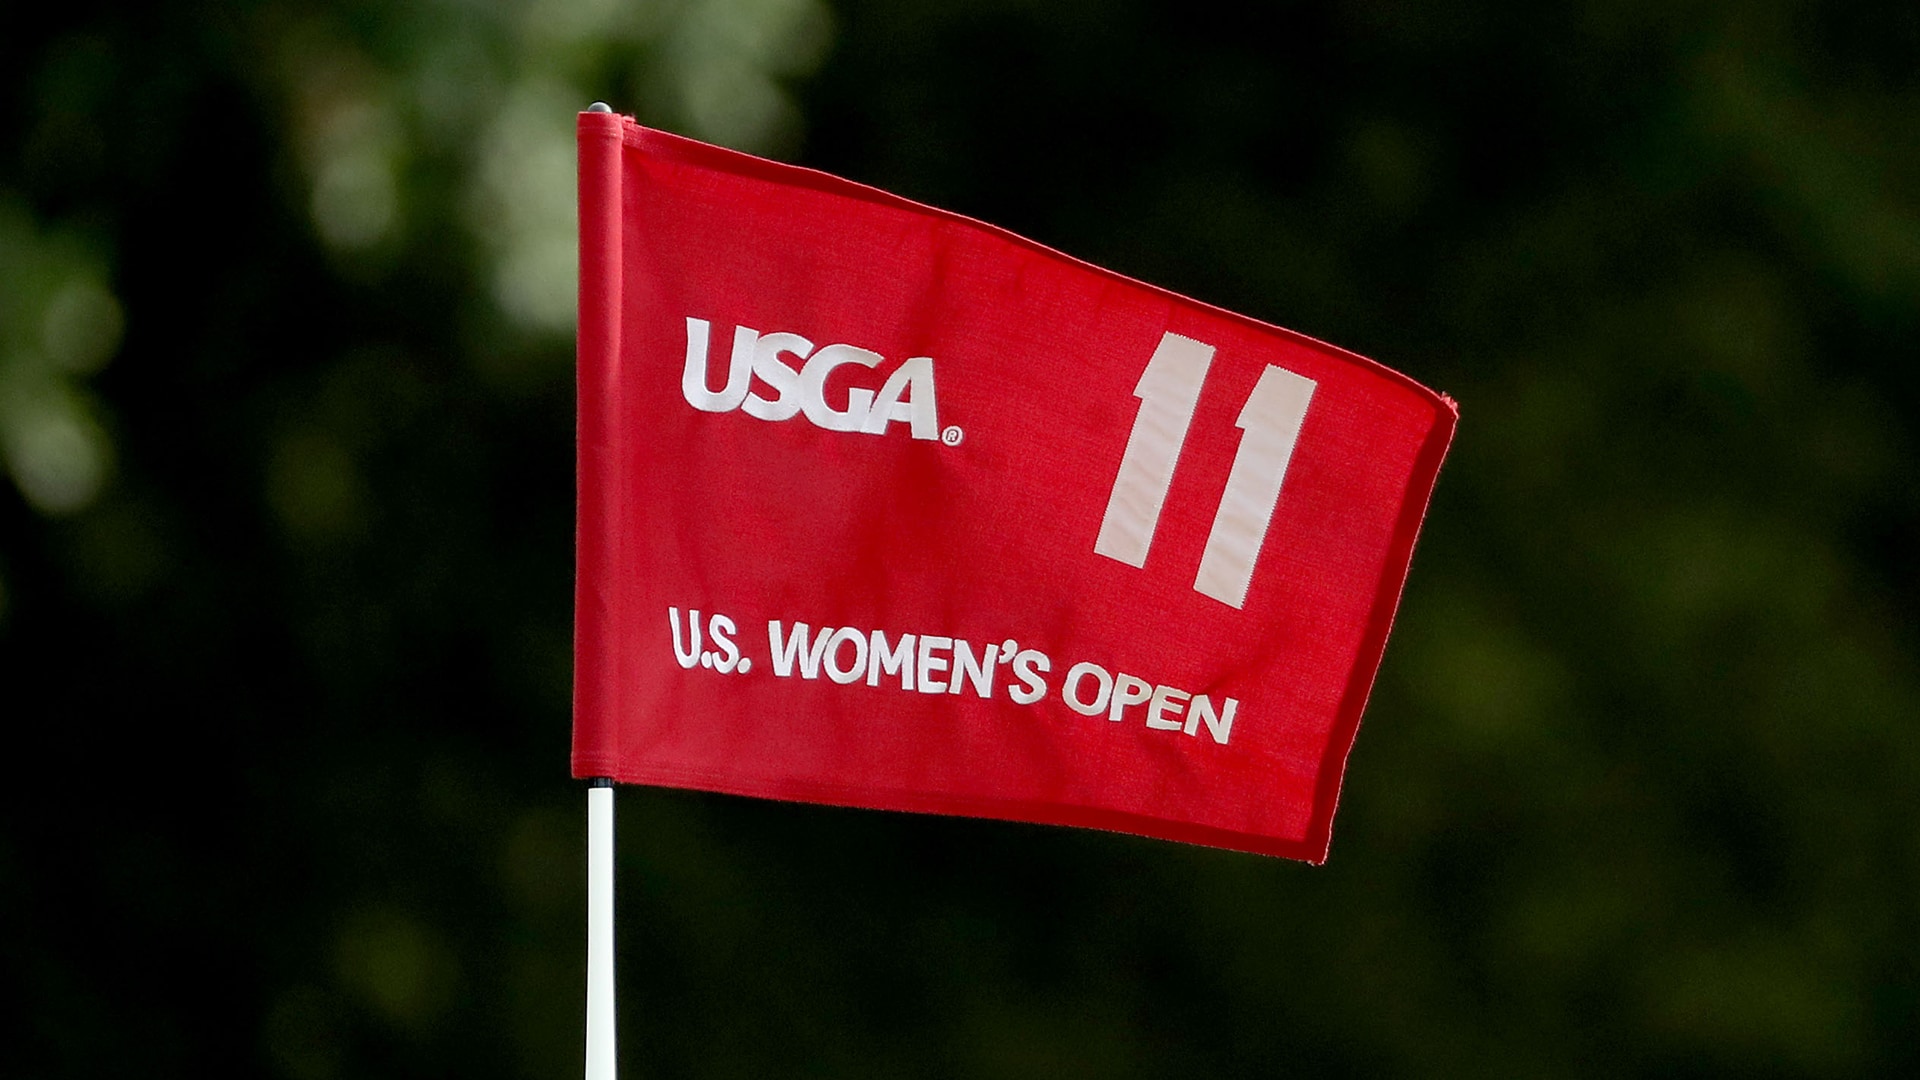 No Fans Allowed at U.S. Women’s Open in December